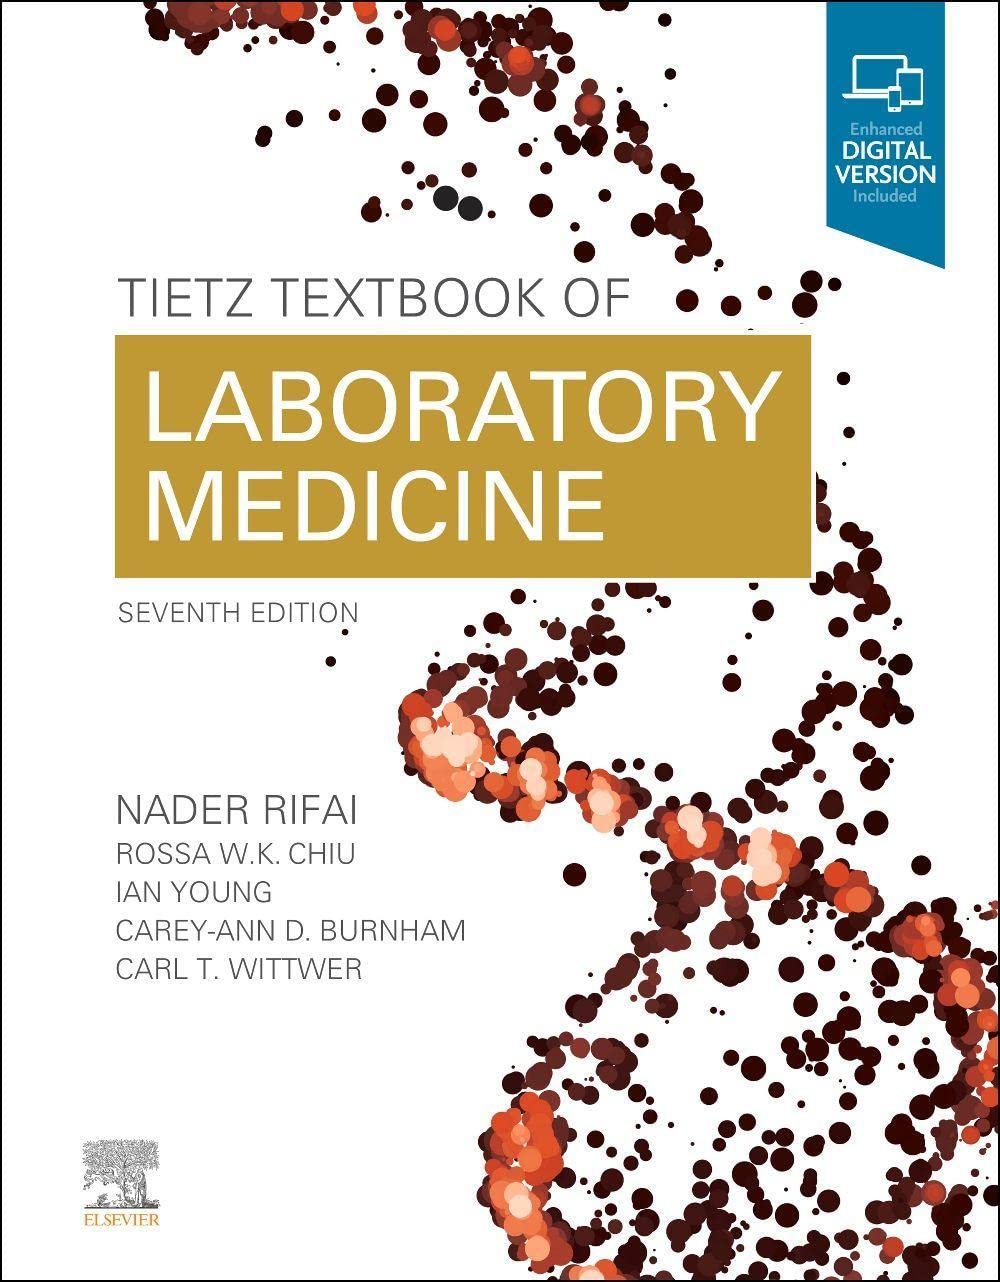 Tietz Textbook of Laboratory Medicine,7th Edition  by Nader Rifai PhD 